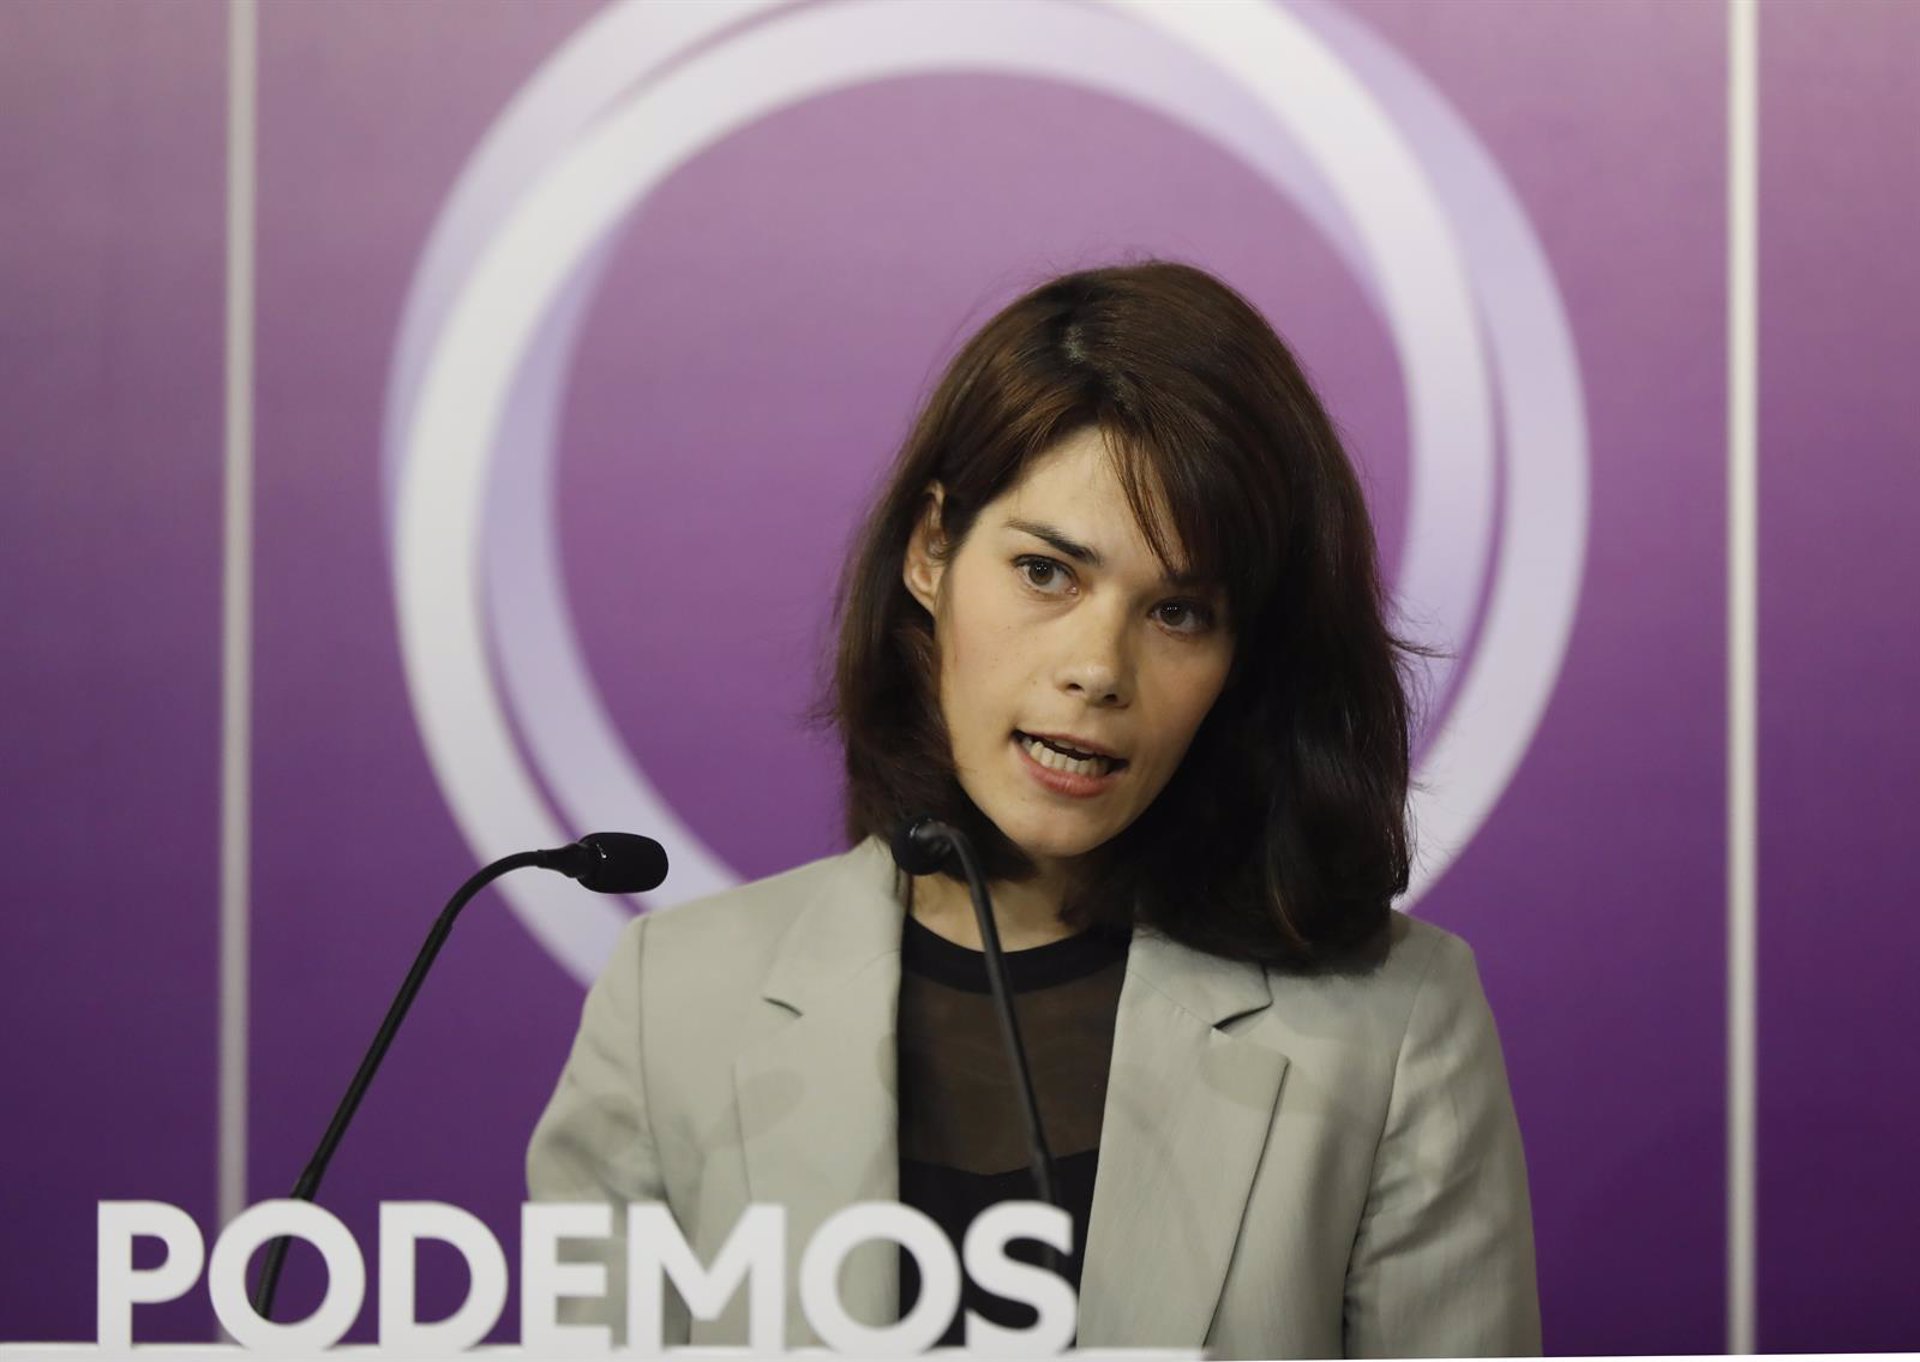 La coportavoz de Podemos, Isa Serra